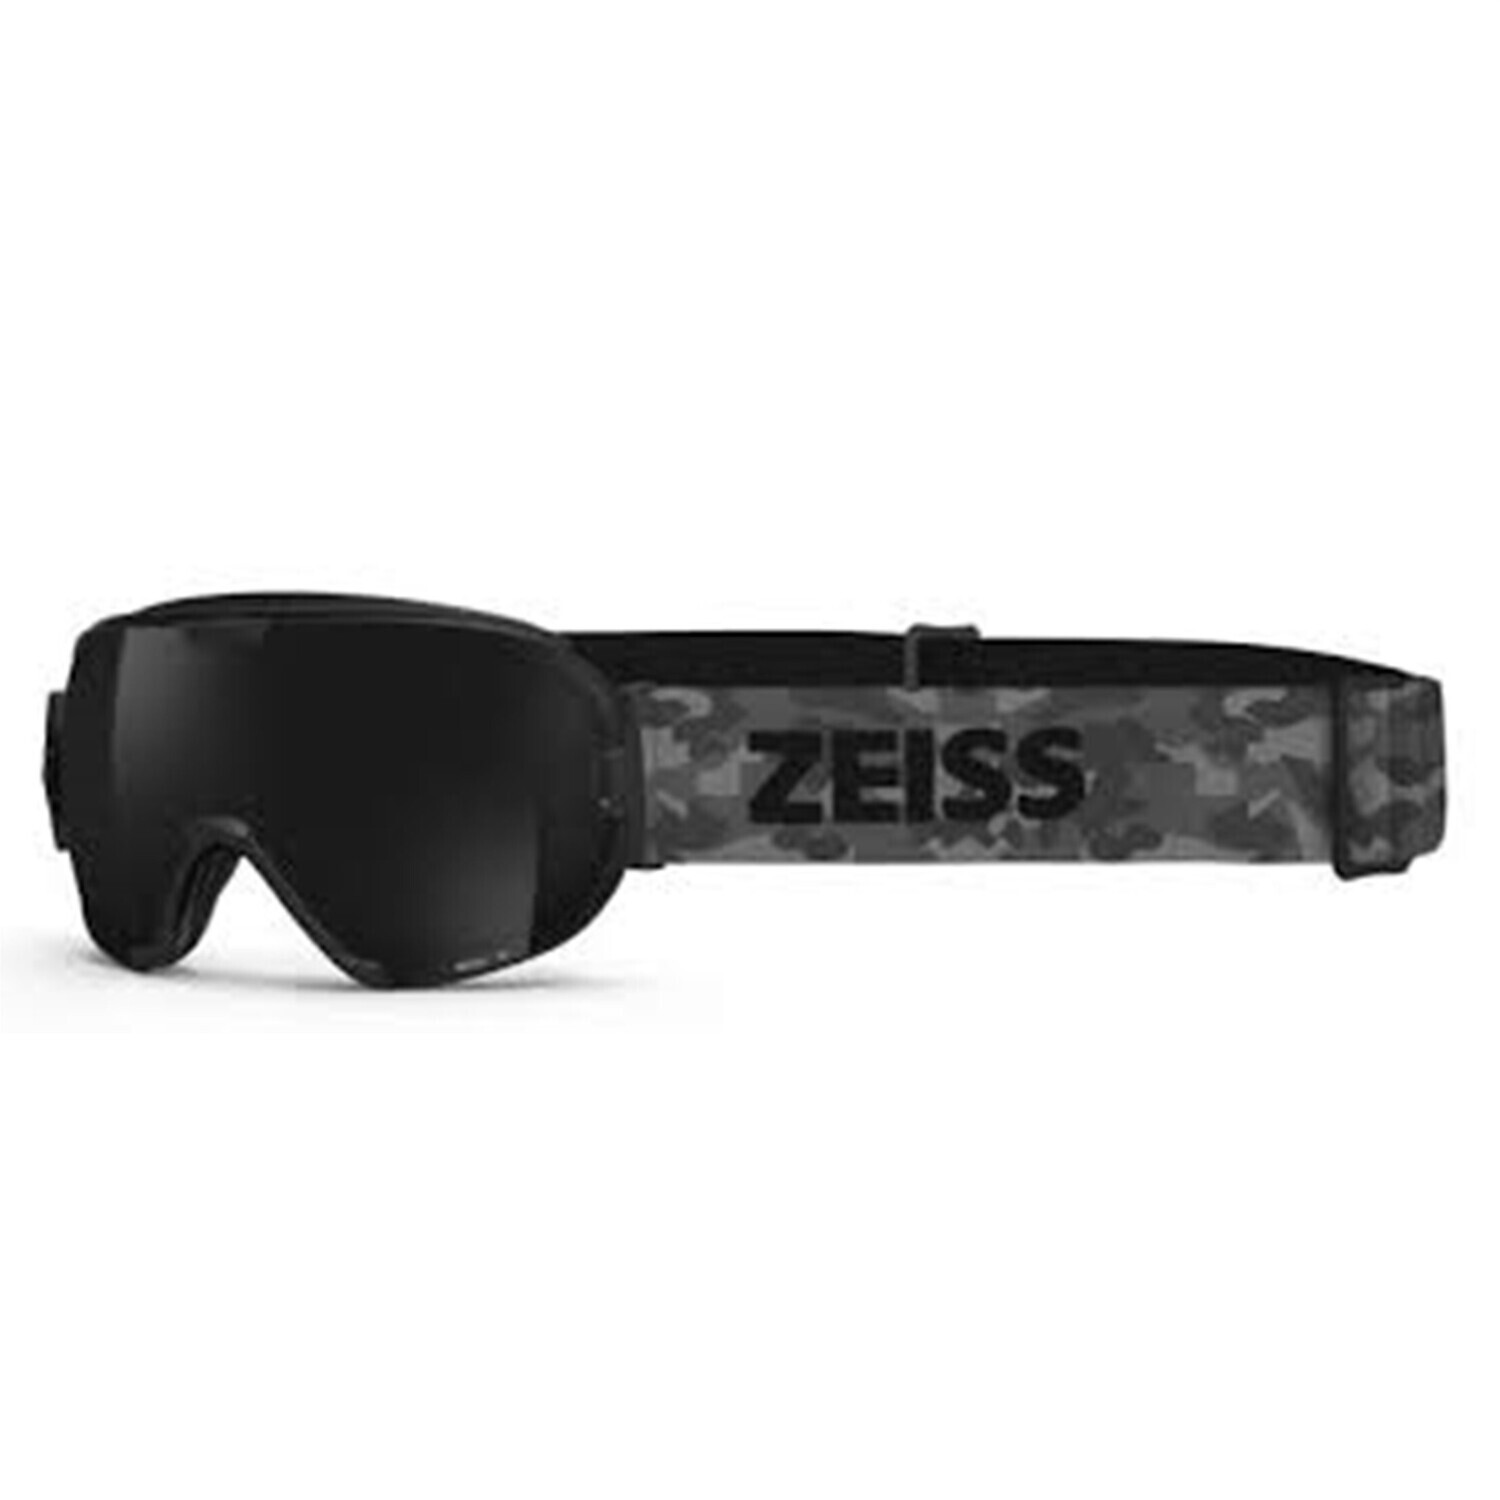 Zeiss skibril interchangeable black - grey lens